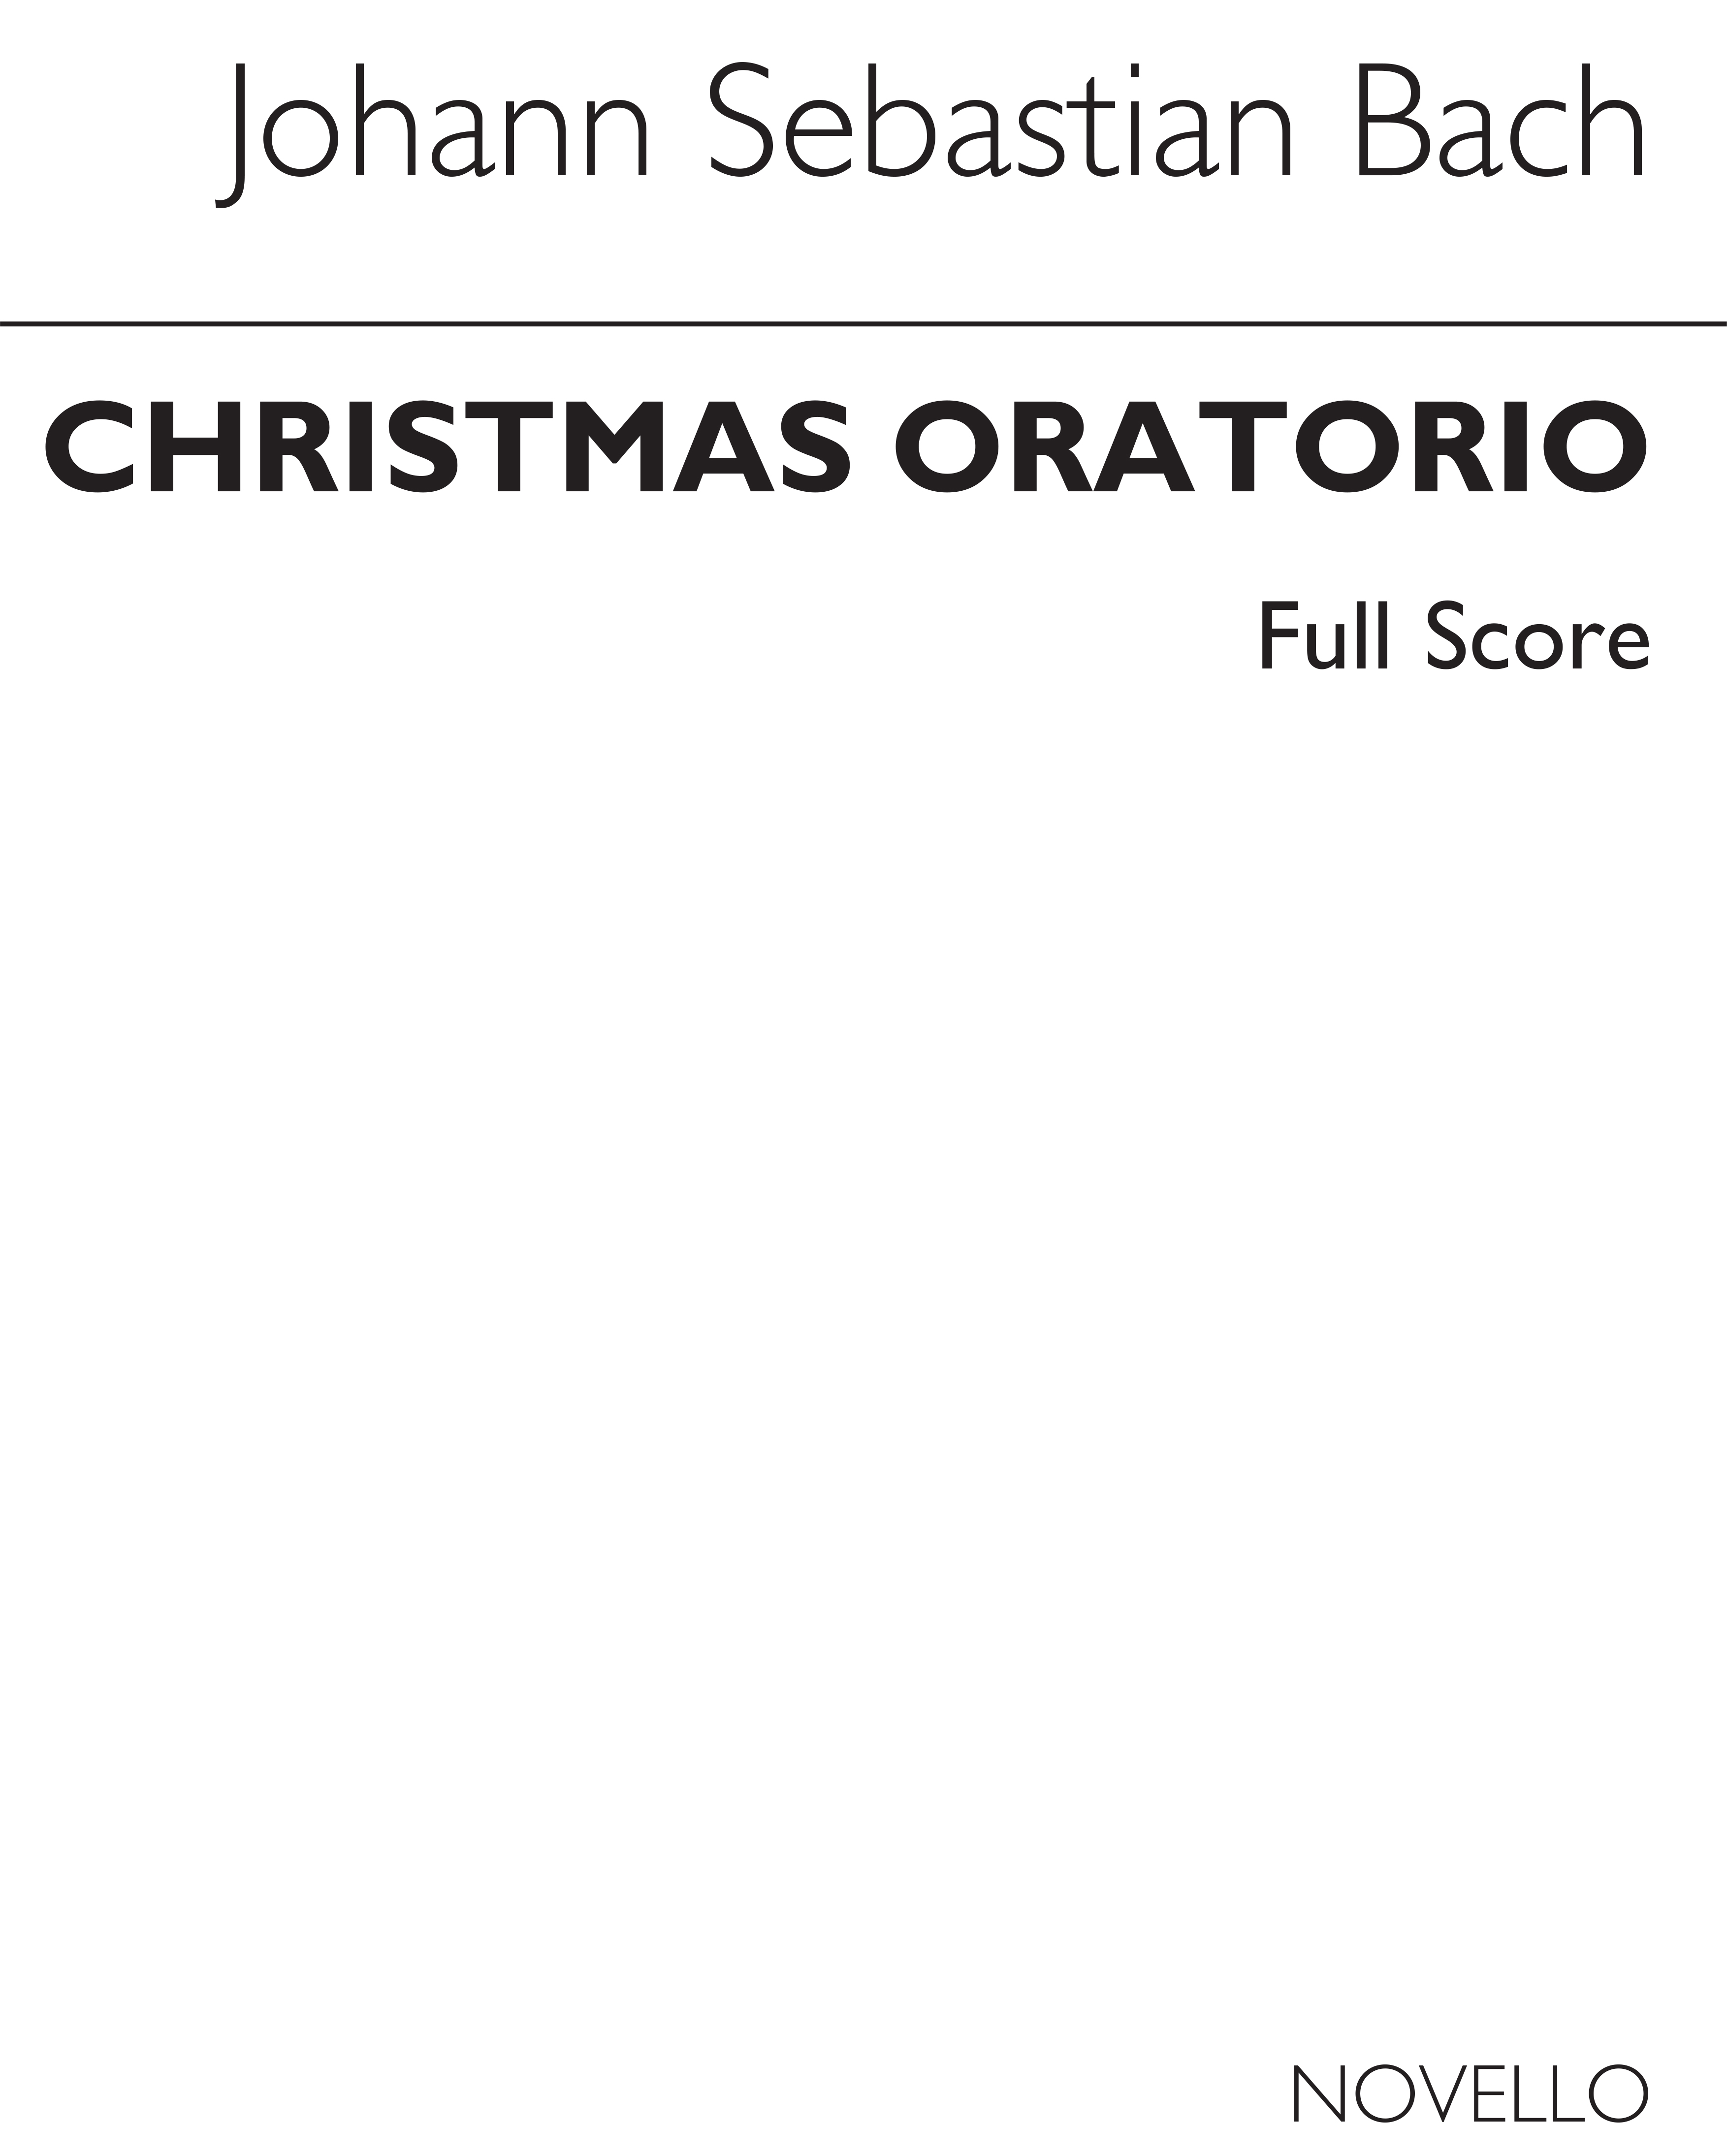 Christmas Oratorio Full Score (Jenkins) English: Score